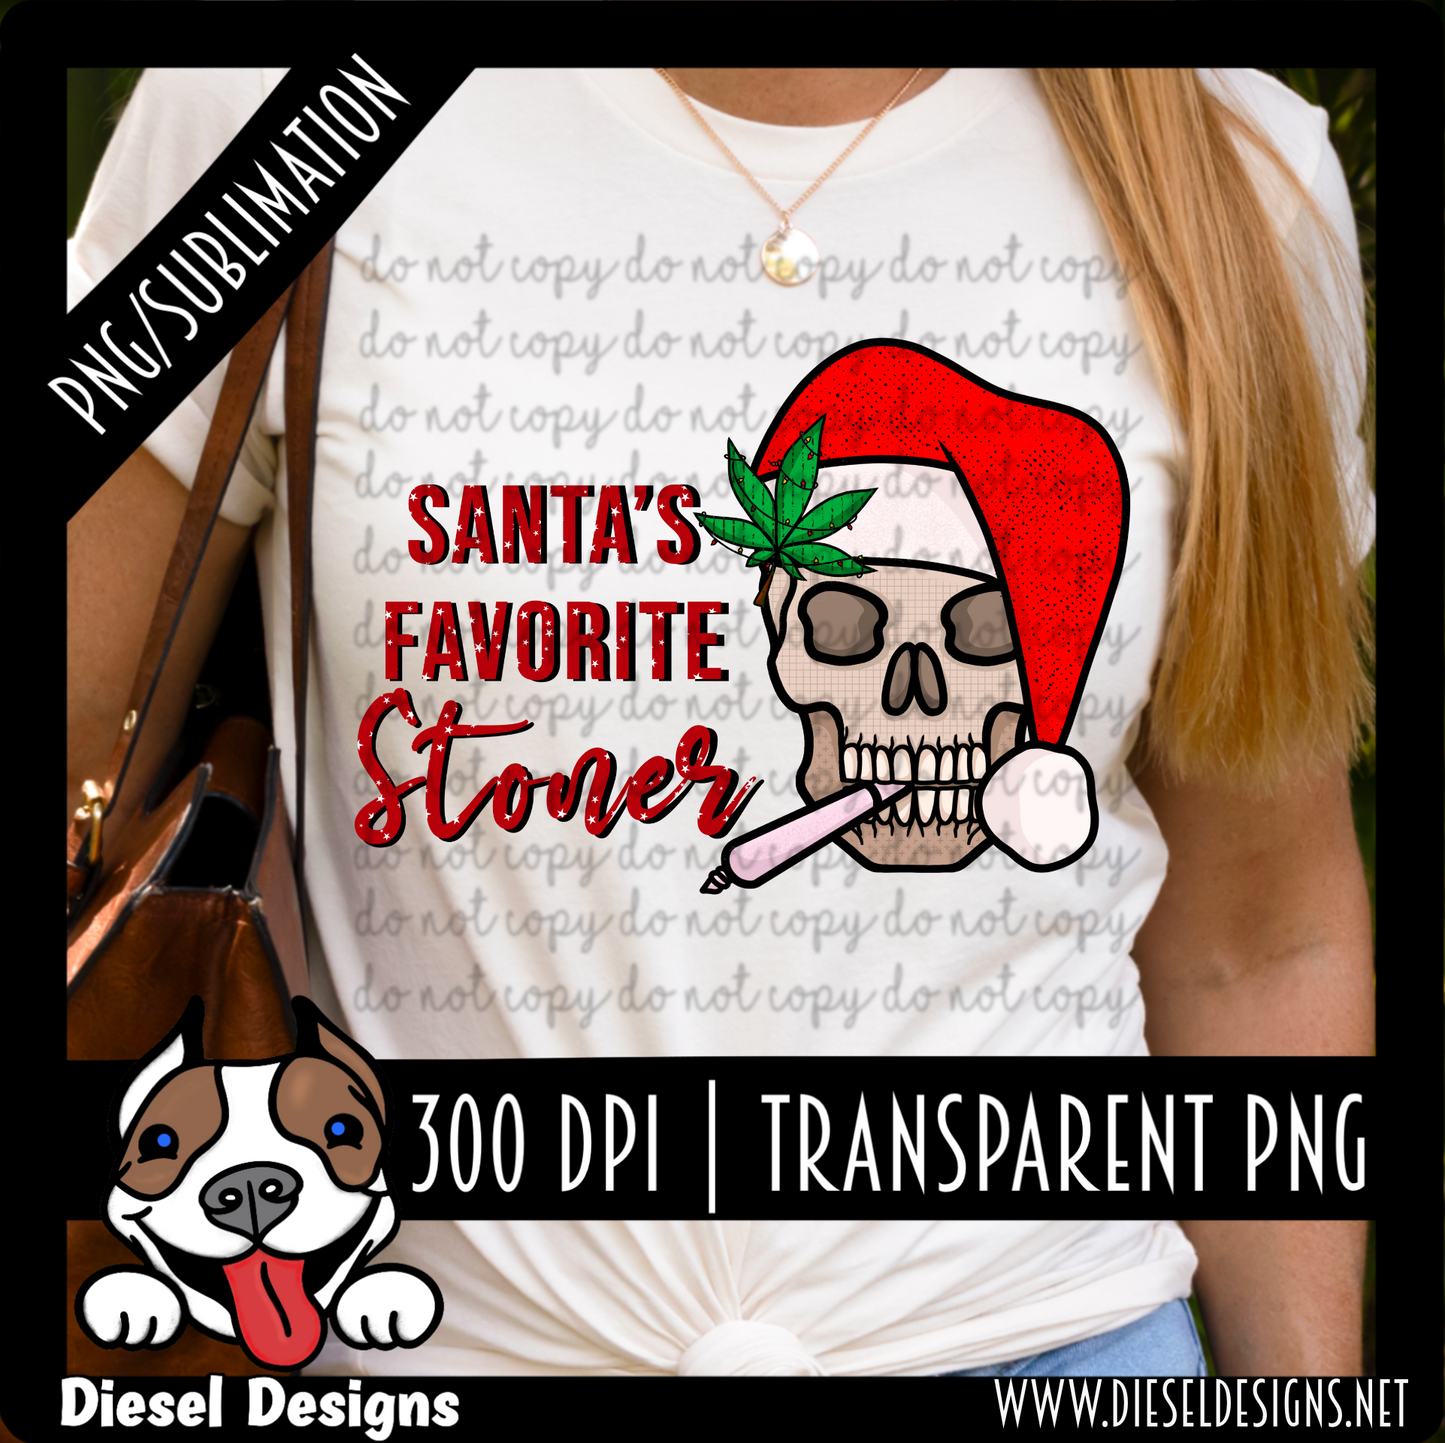 A 420 Christmas Collab | 300 DPI | PNG | Seamless | Tumbler Wraps |